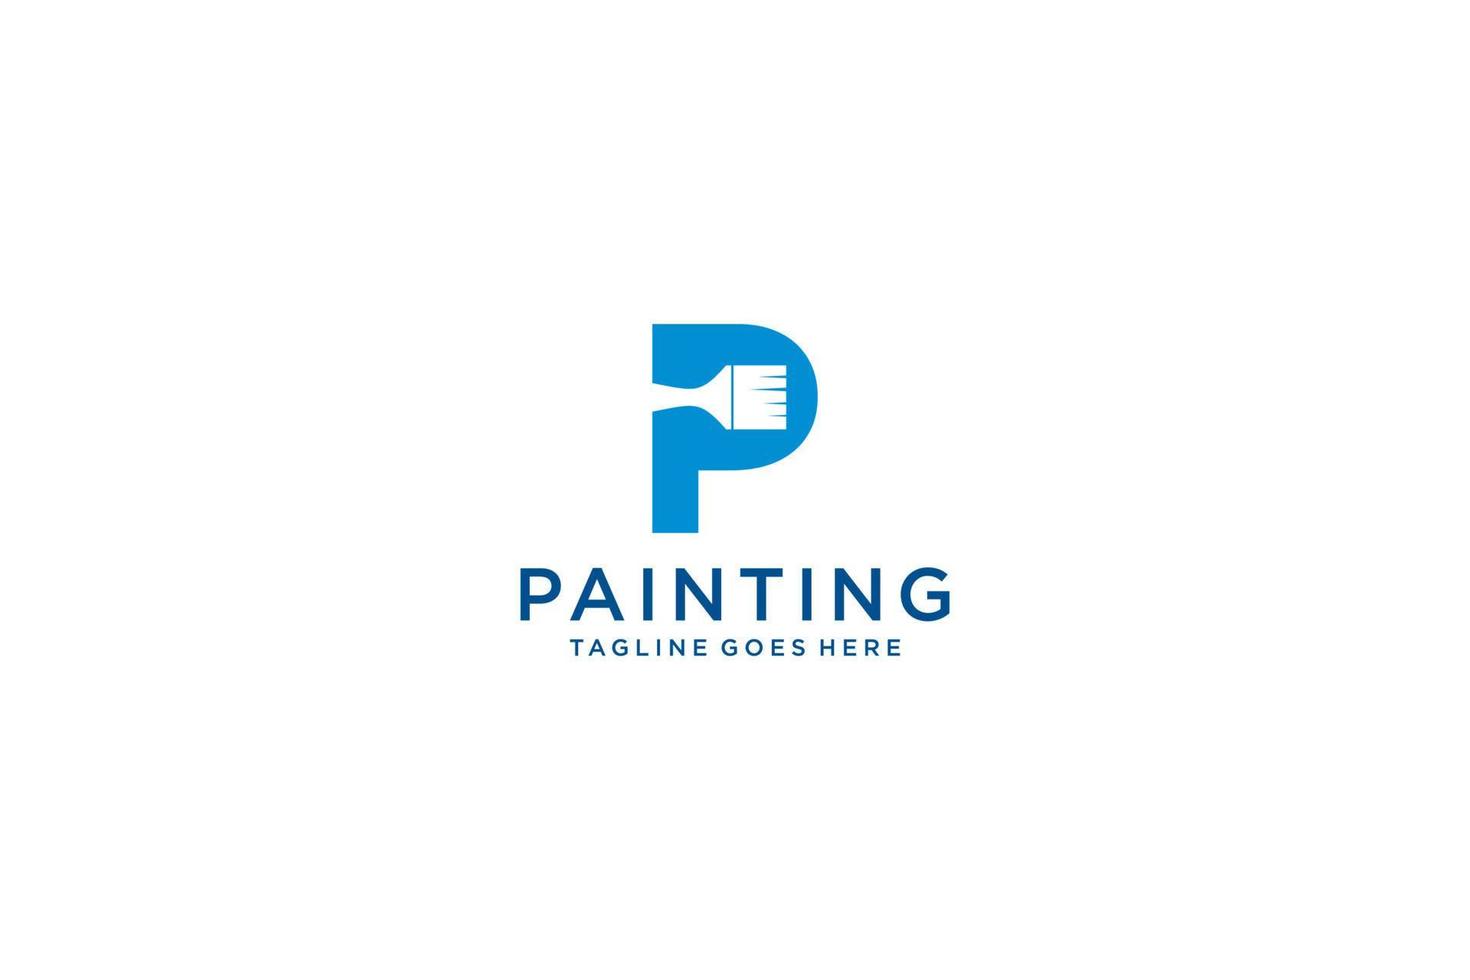 letra p para logotipo de pintura, logotipo de servicios de pintura, vector de logotipo de pintura